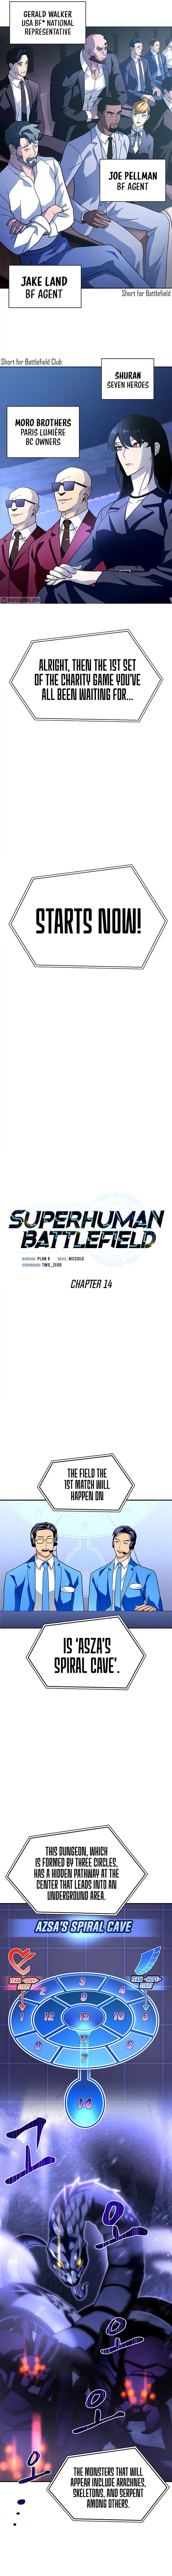 superhuman-battlefield-chap-14-2